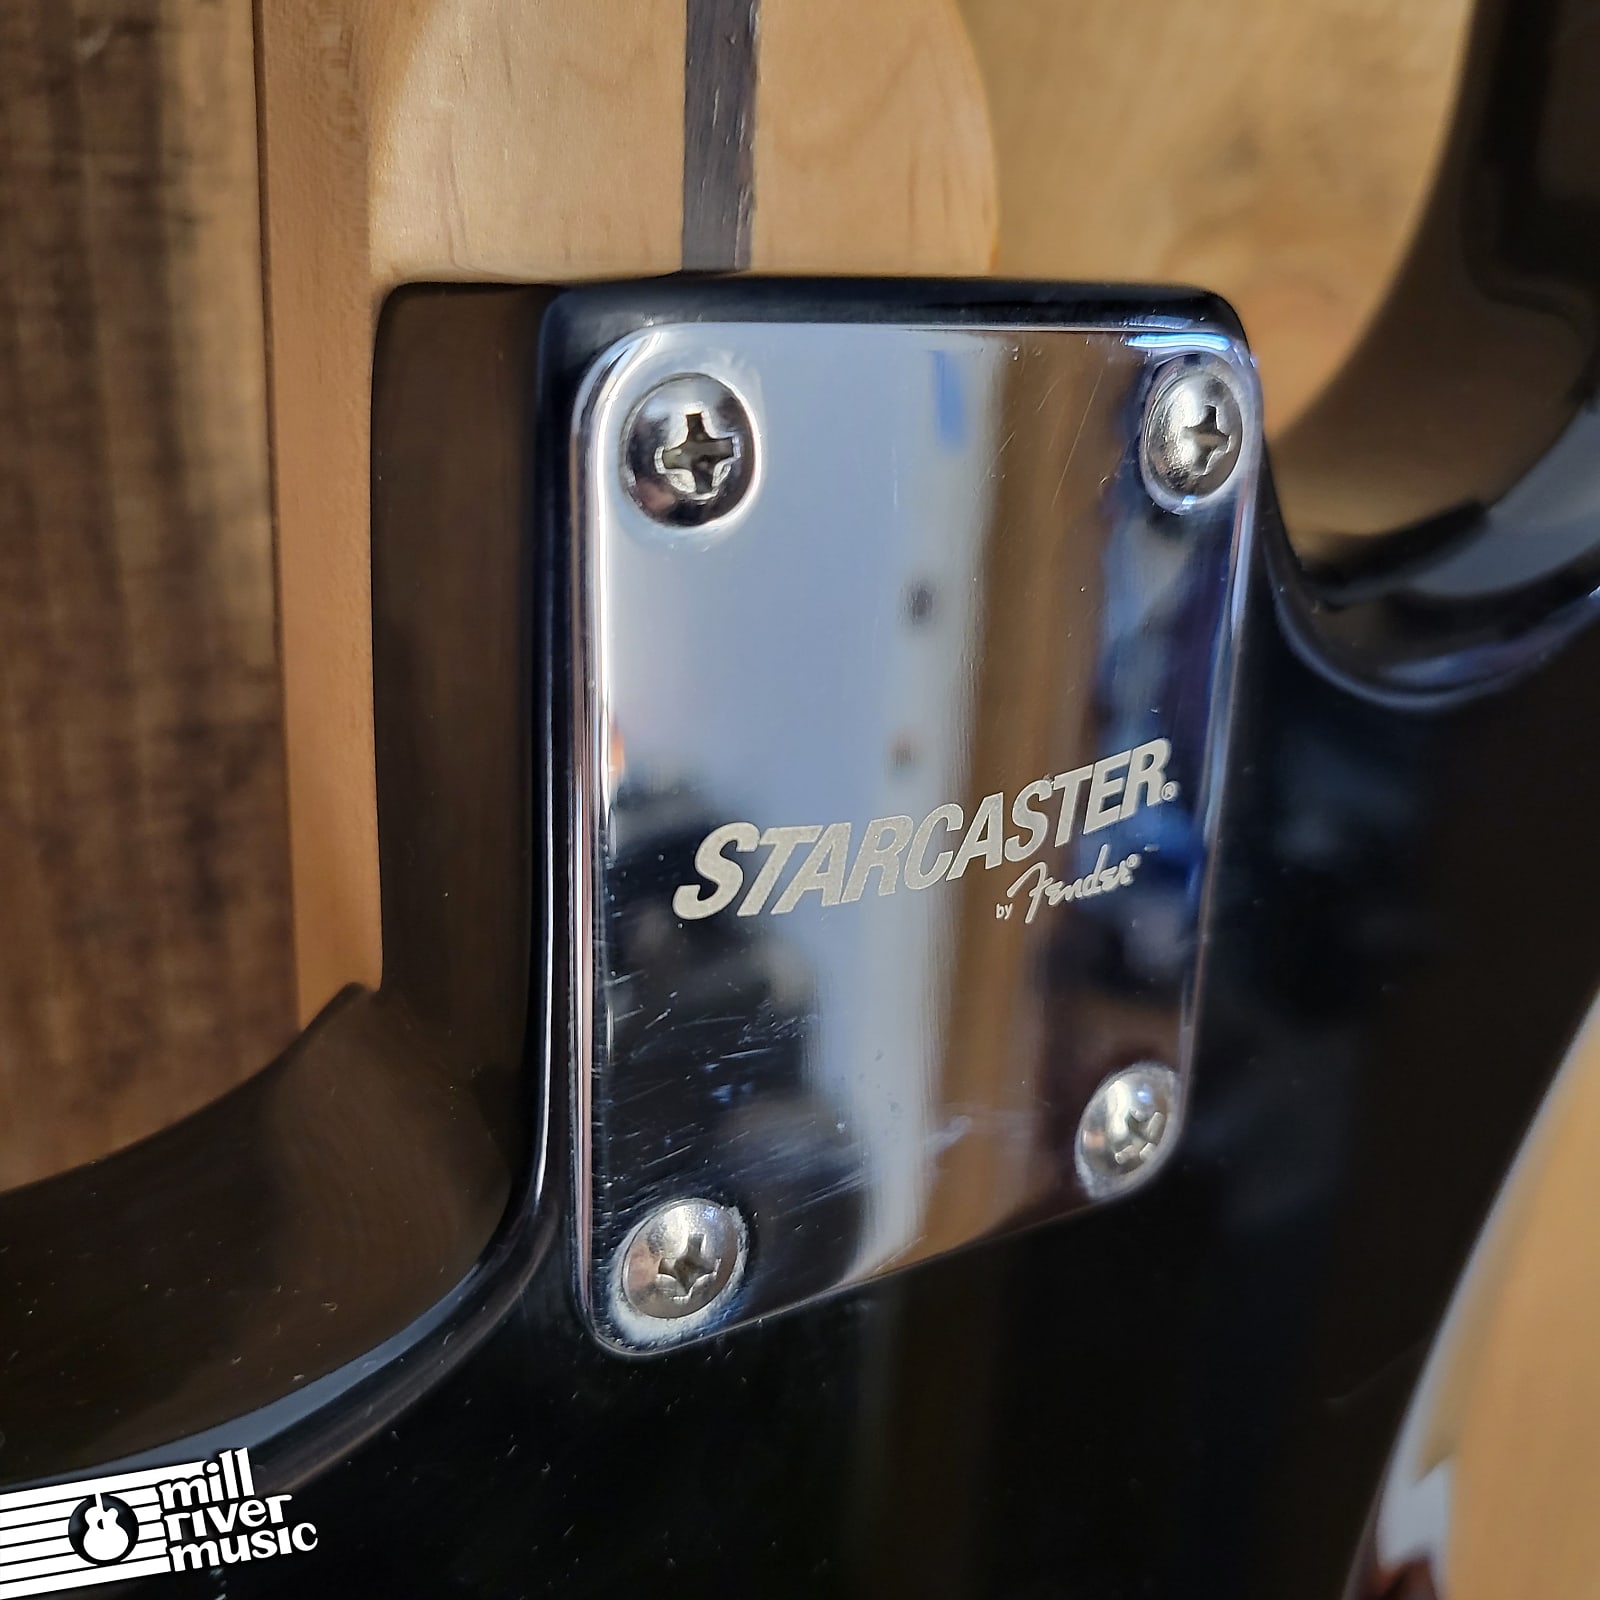 Fender Starcaster Electric Guitar Black Used